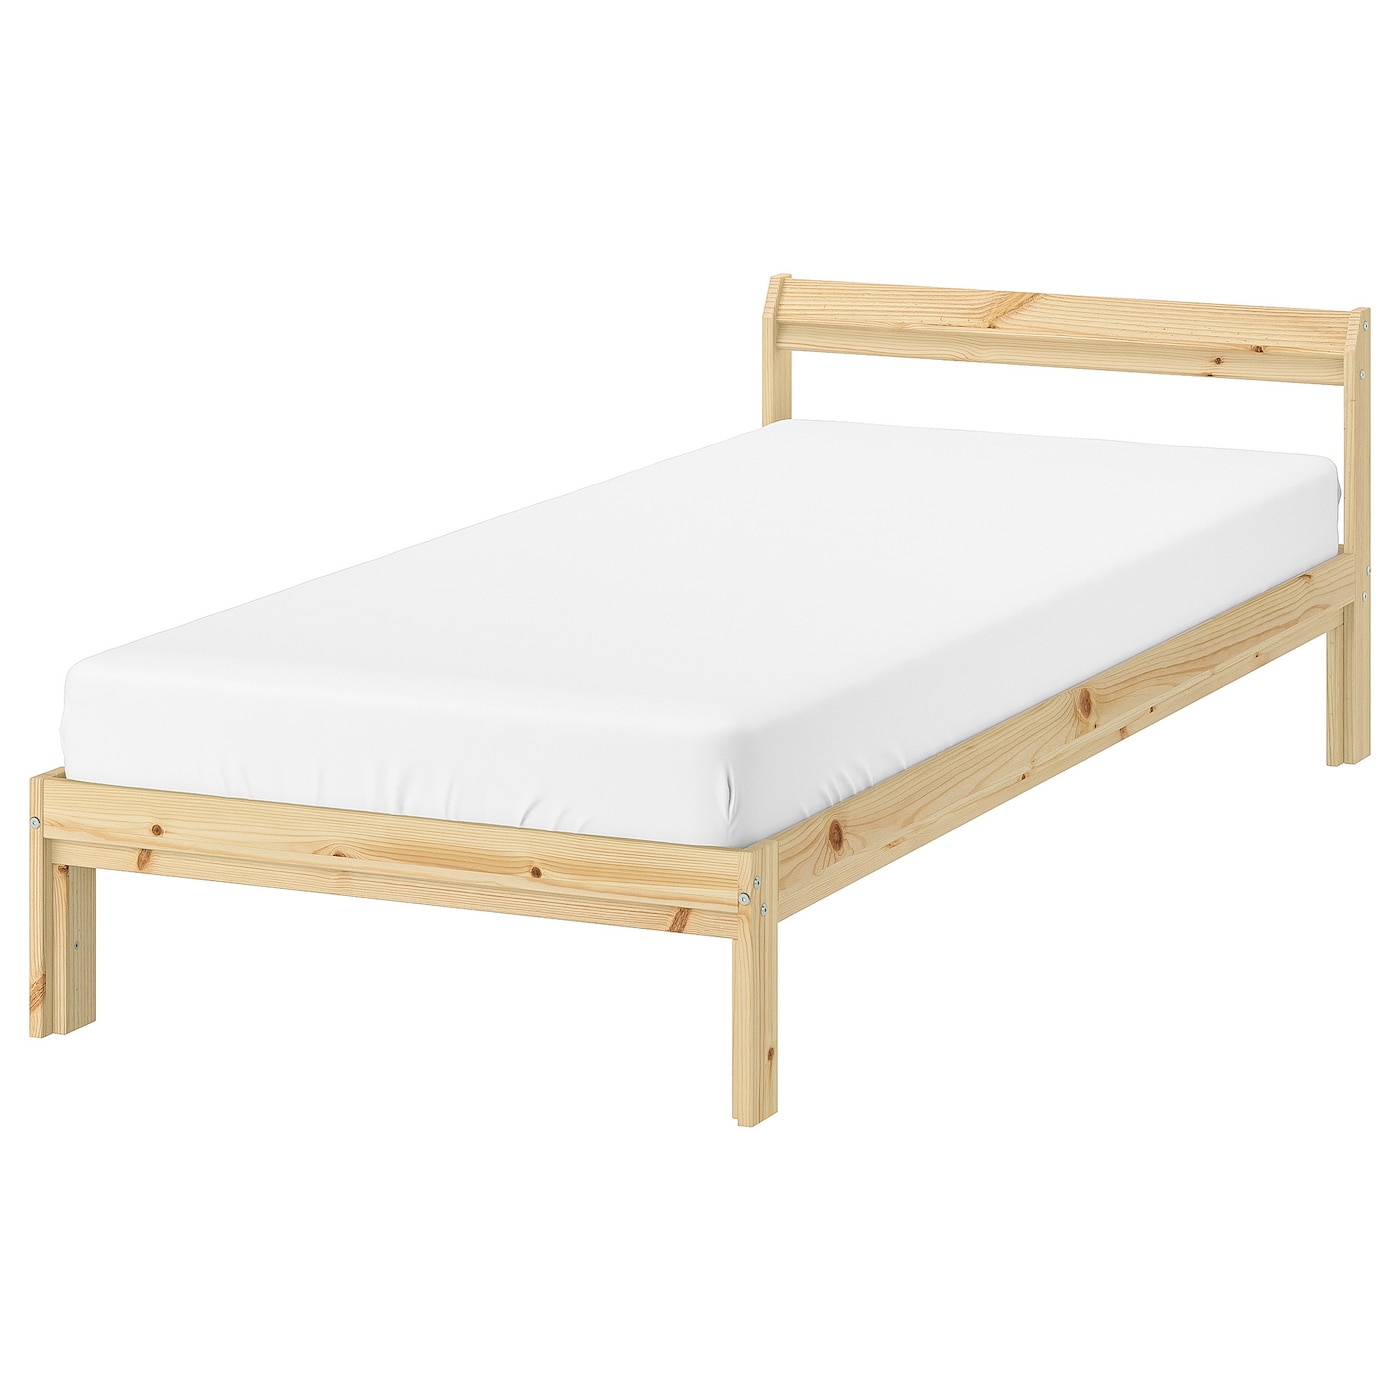 Каркас кровати - IKEA NEIDEN, 200х90 см, сосна, НЕЙДЕН ИКЕА